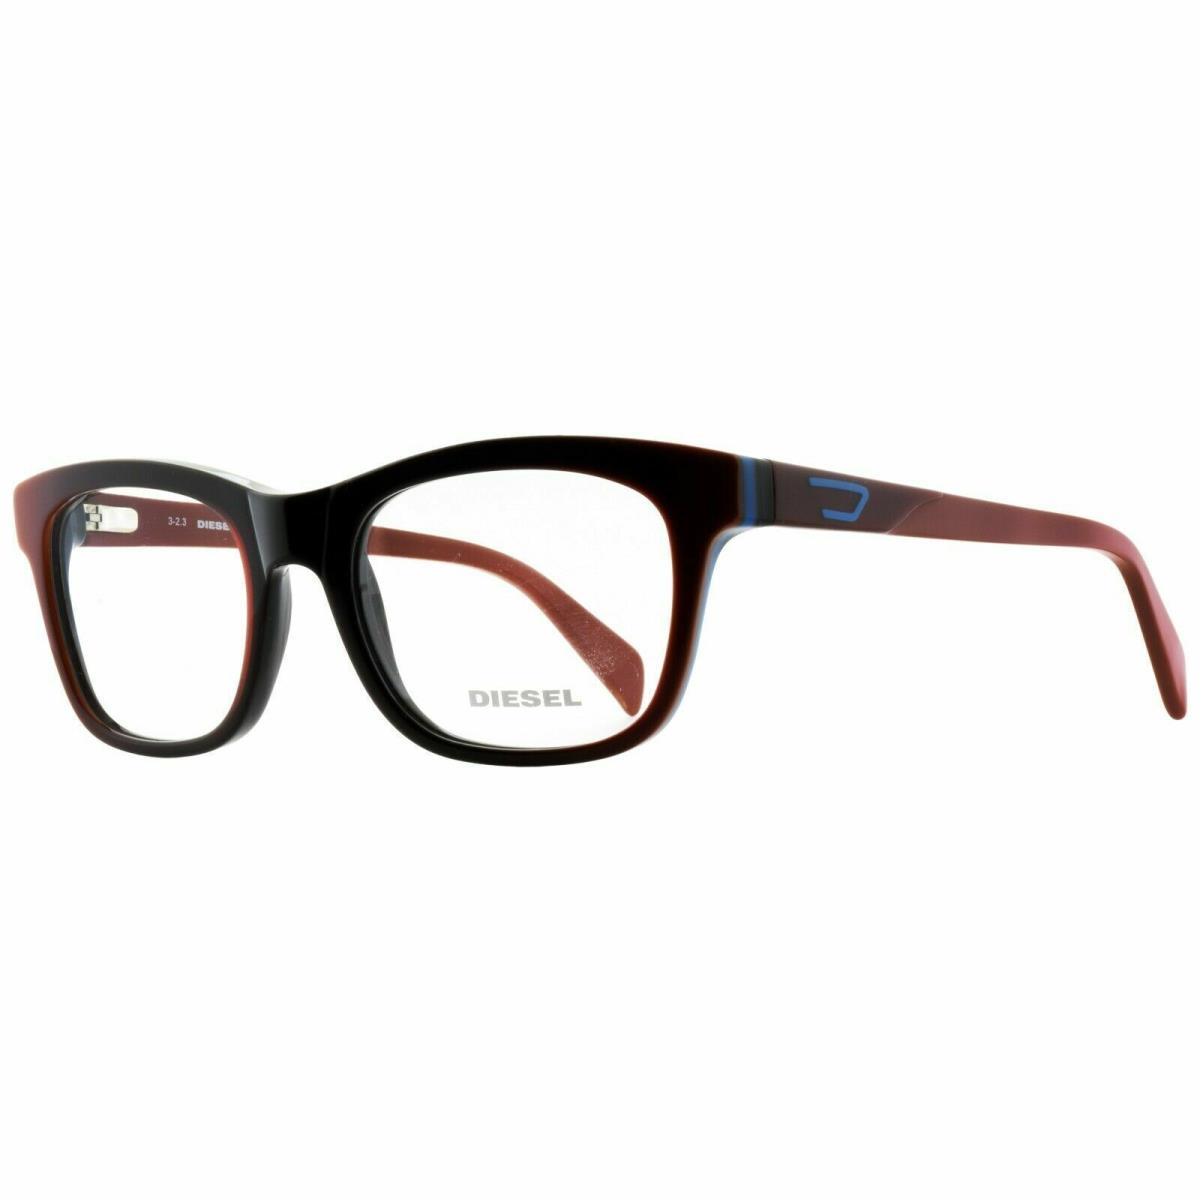 Diesel DL5079 050 Square Black Brown Optical Frames Eyeglasses